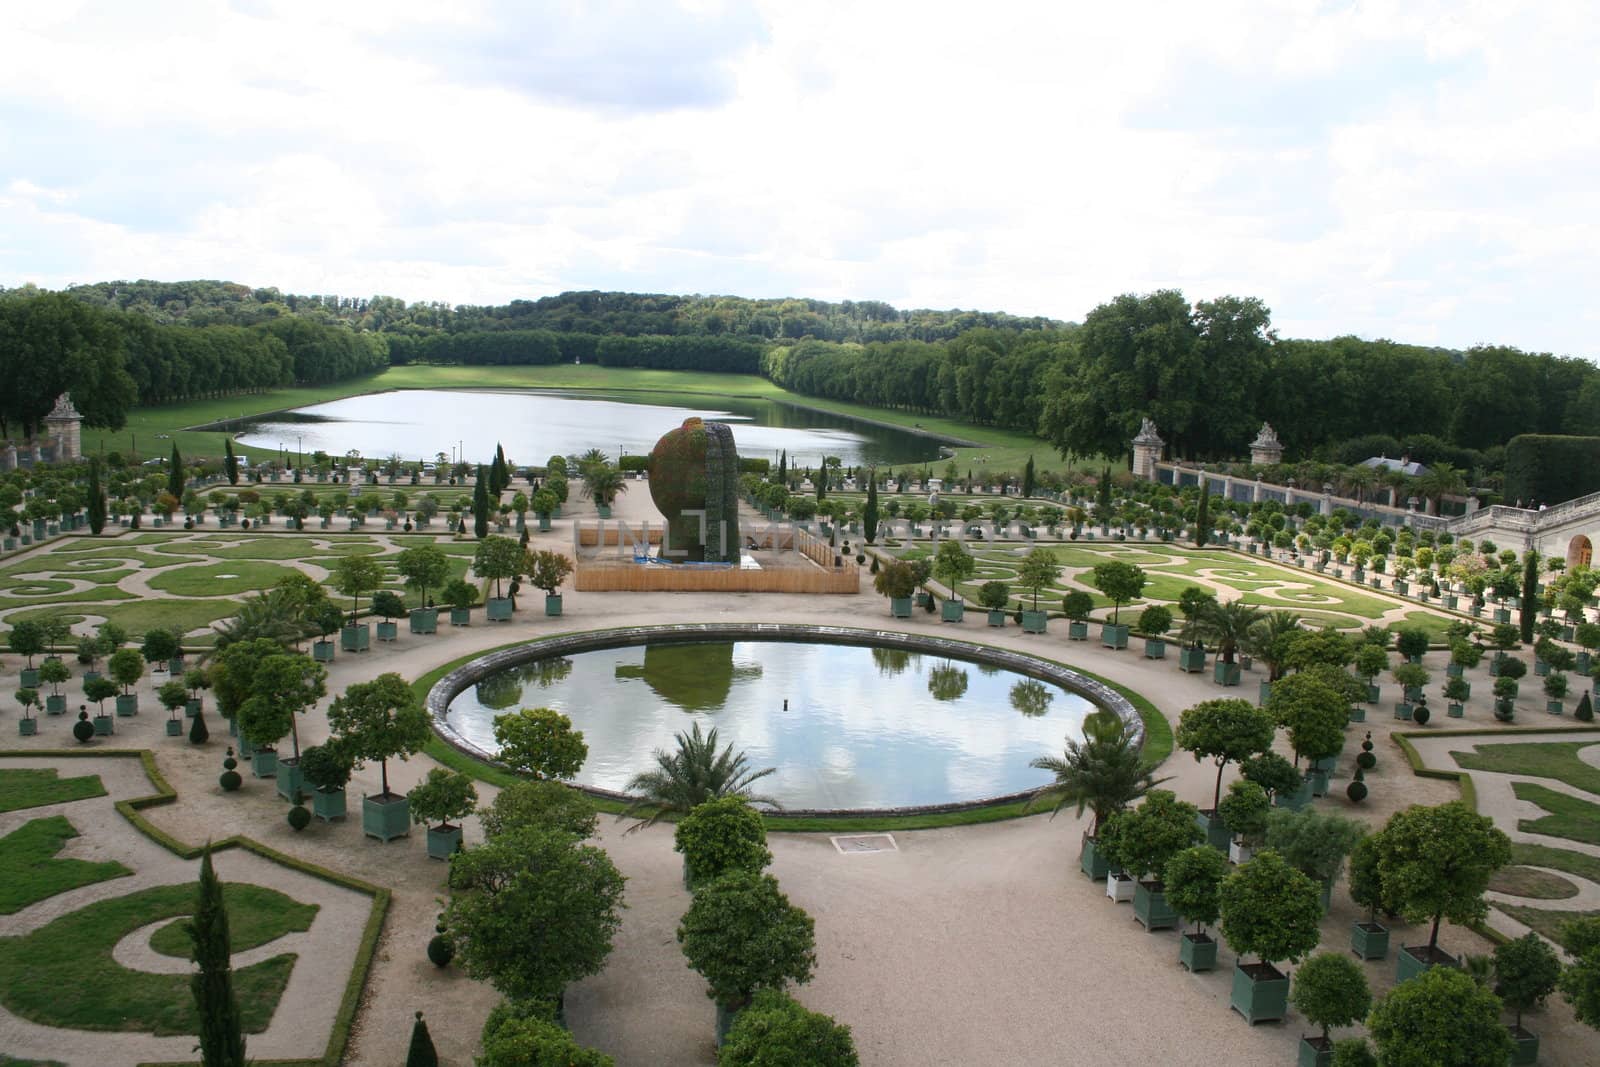 Gardens at Versailles by ronlan